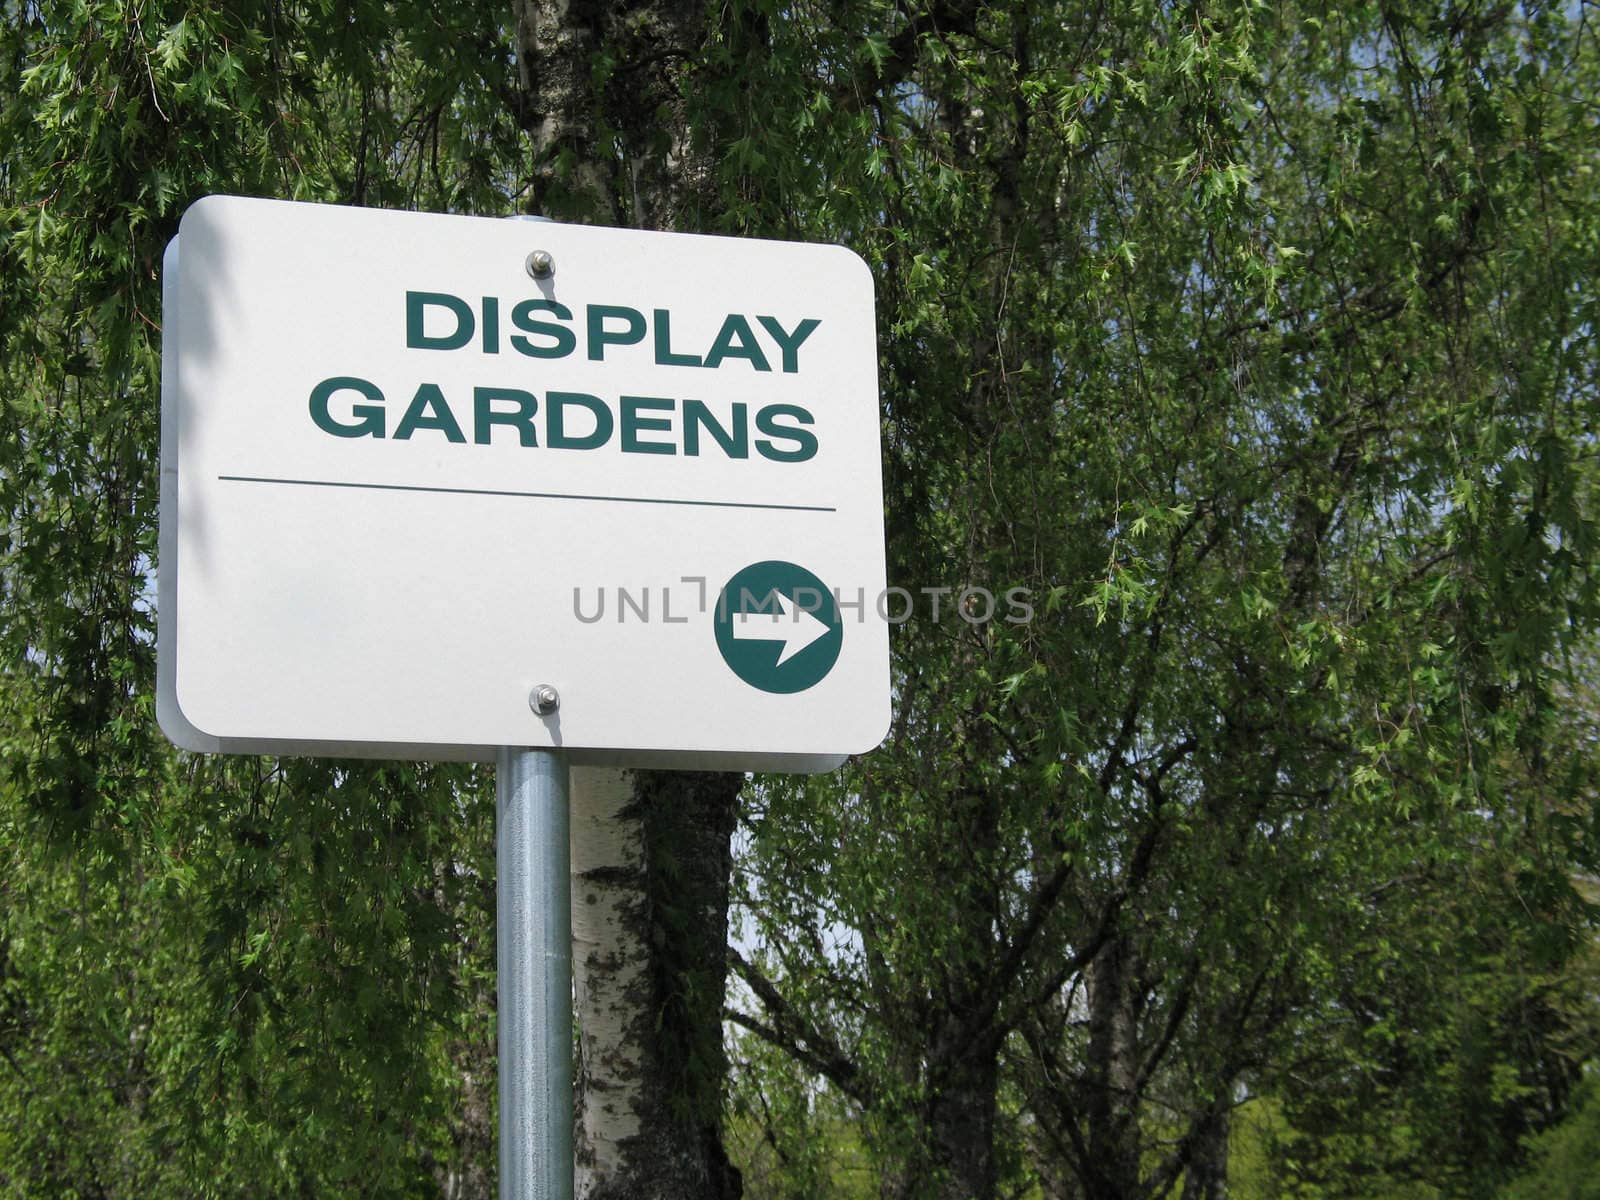 display gardens sign